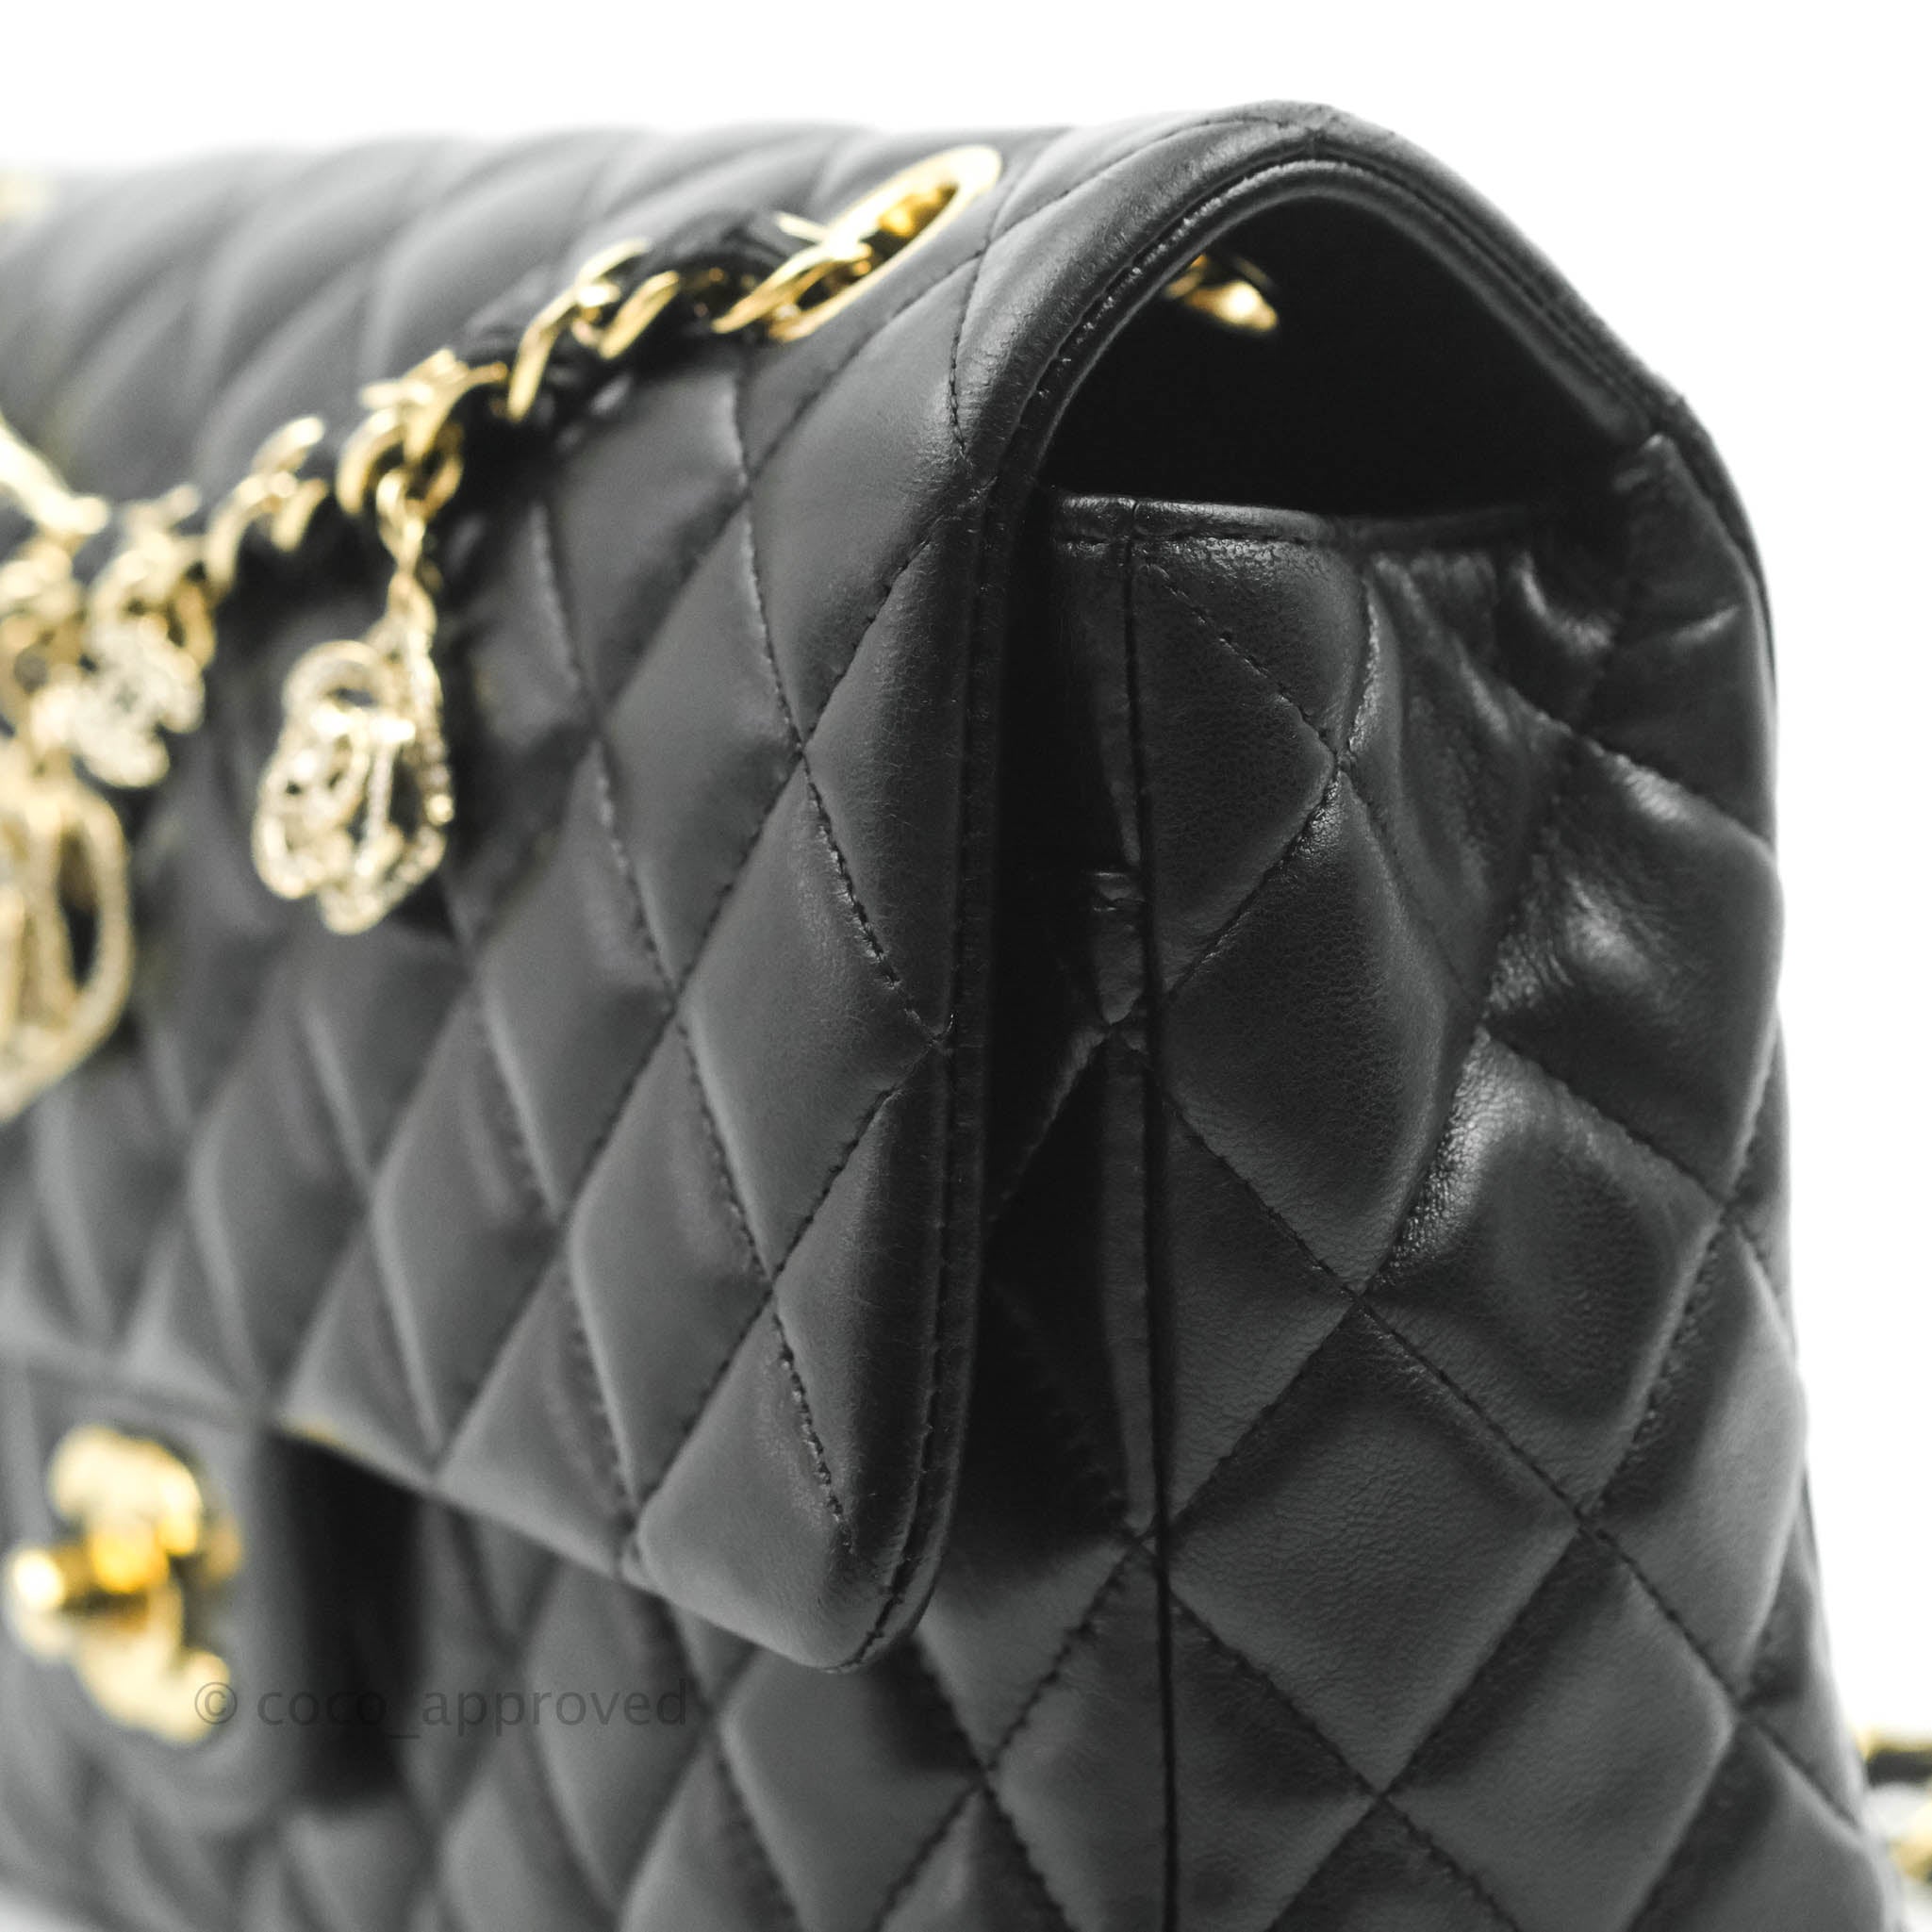 Chanel Black Lambskin Stitched Medium Coco Luxe Flap Bag, myGemma